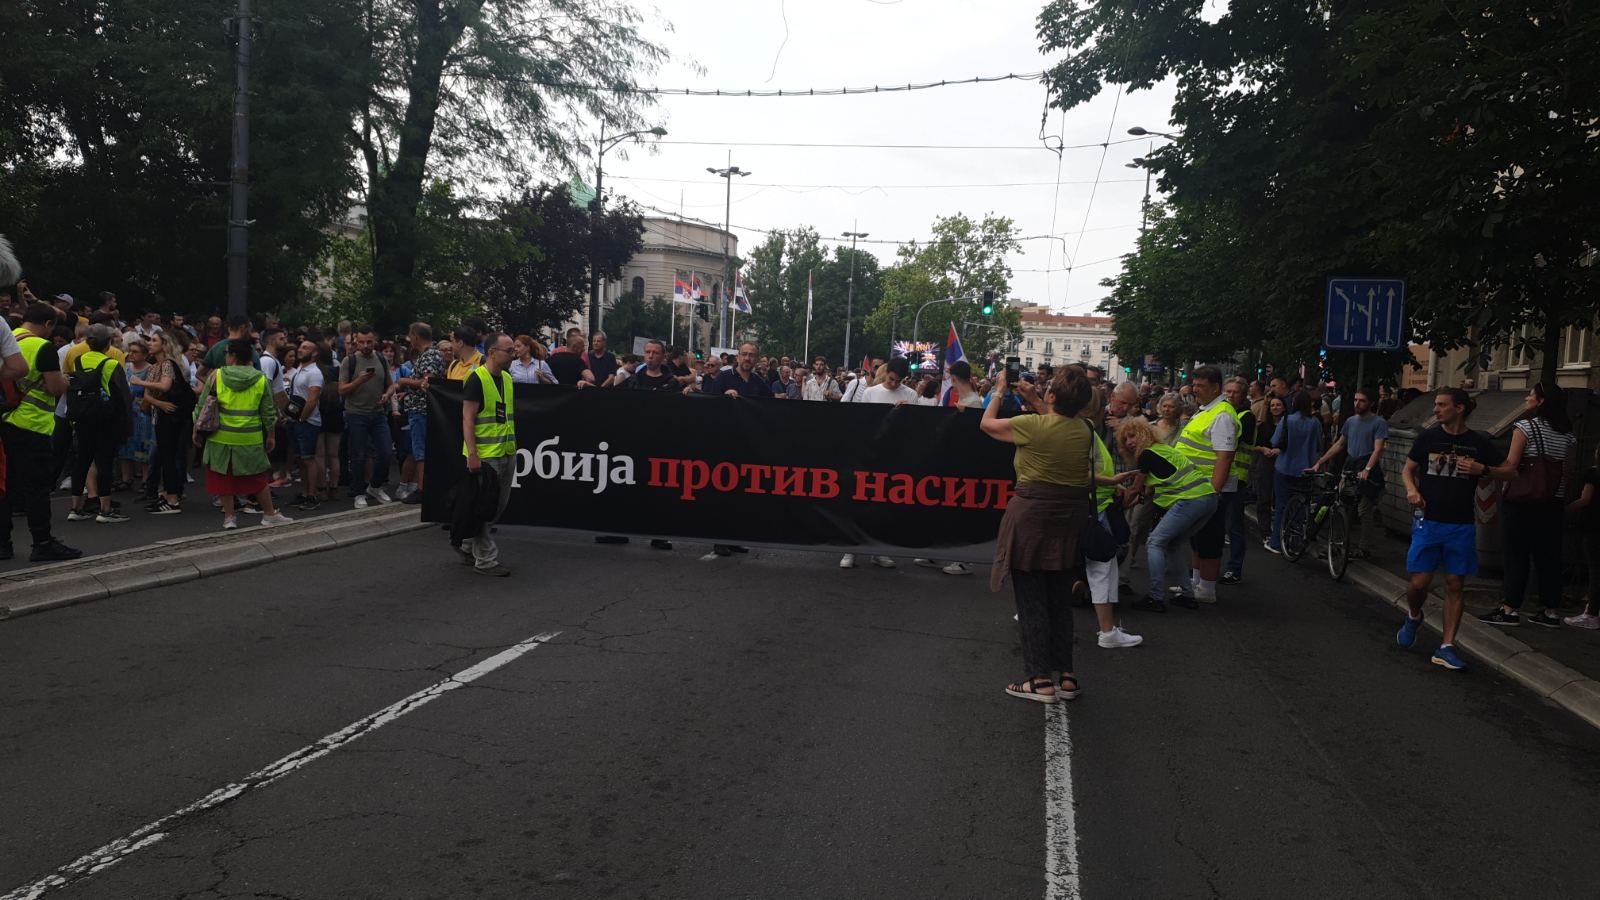 Protest "Srbija protiv nasilja" u preko 10 gradova obeležile šetnje, blokade puteva i zahtevi za ostavkama (FOTO, VIDEO) 53